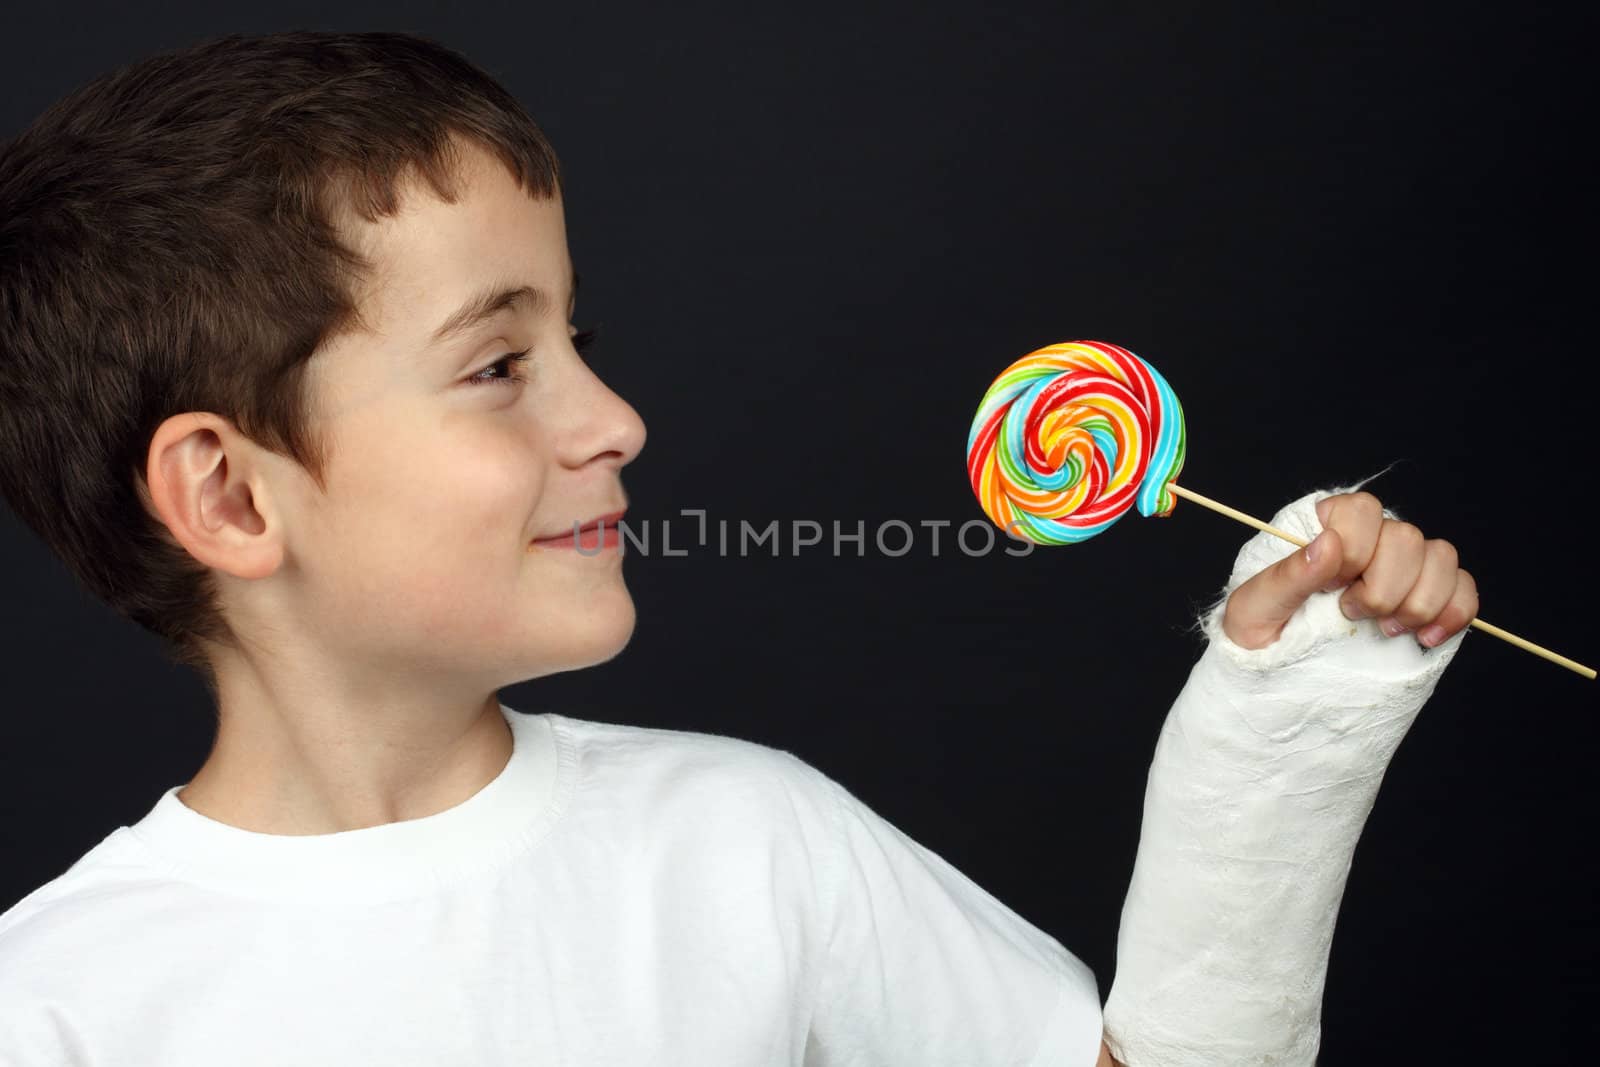 Boy with broken hand in cast, holding a lollipop